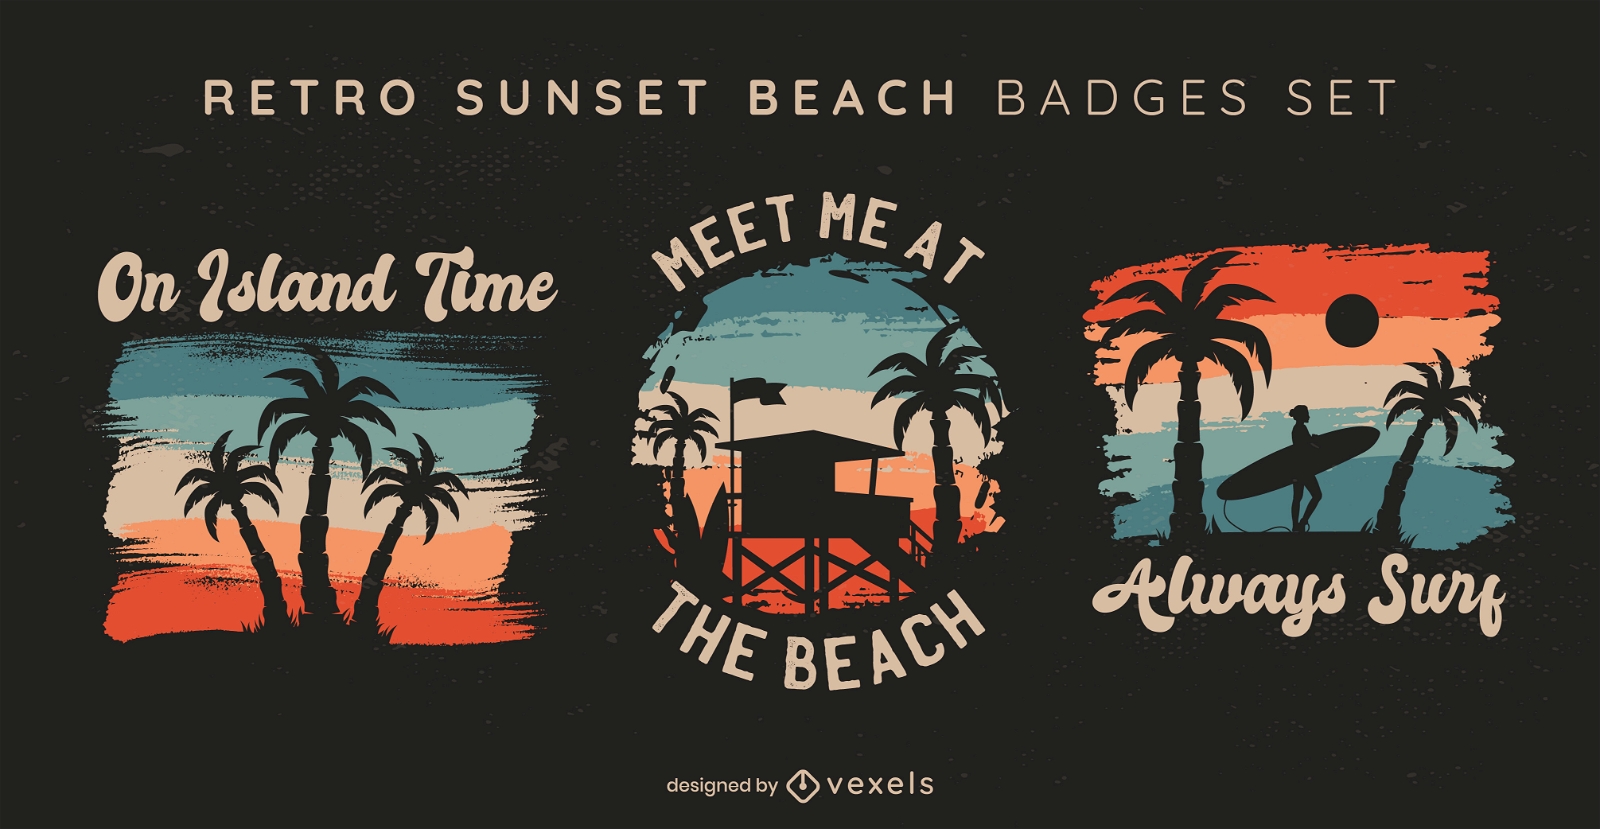 Retro sunset beach badges set